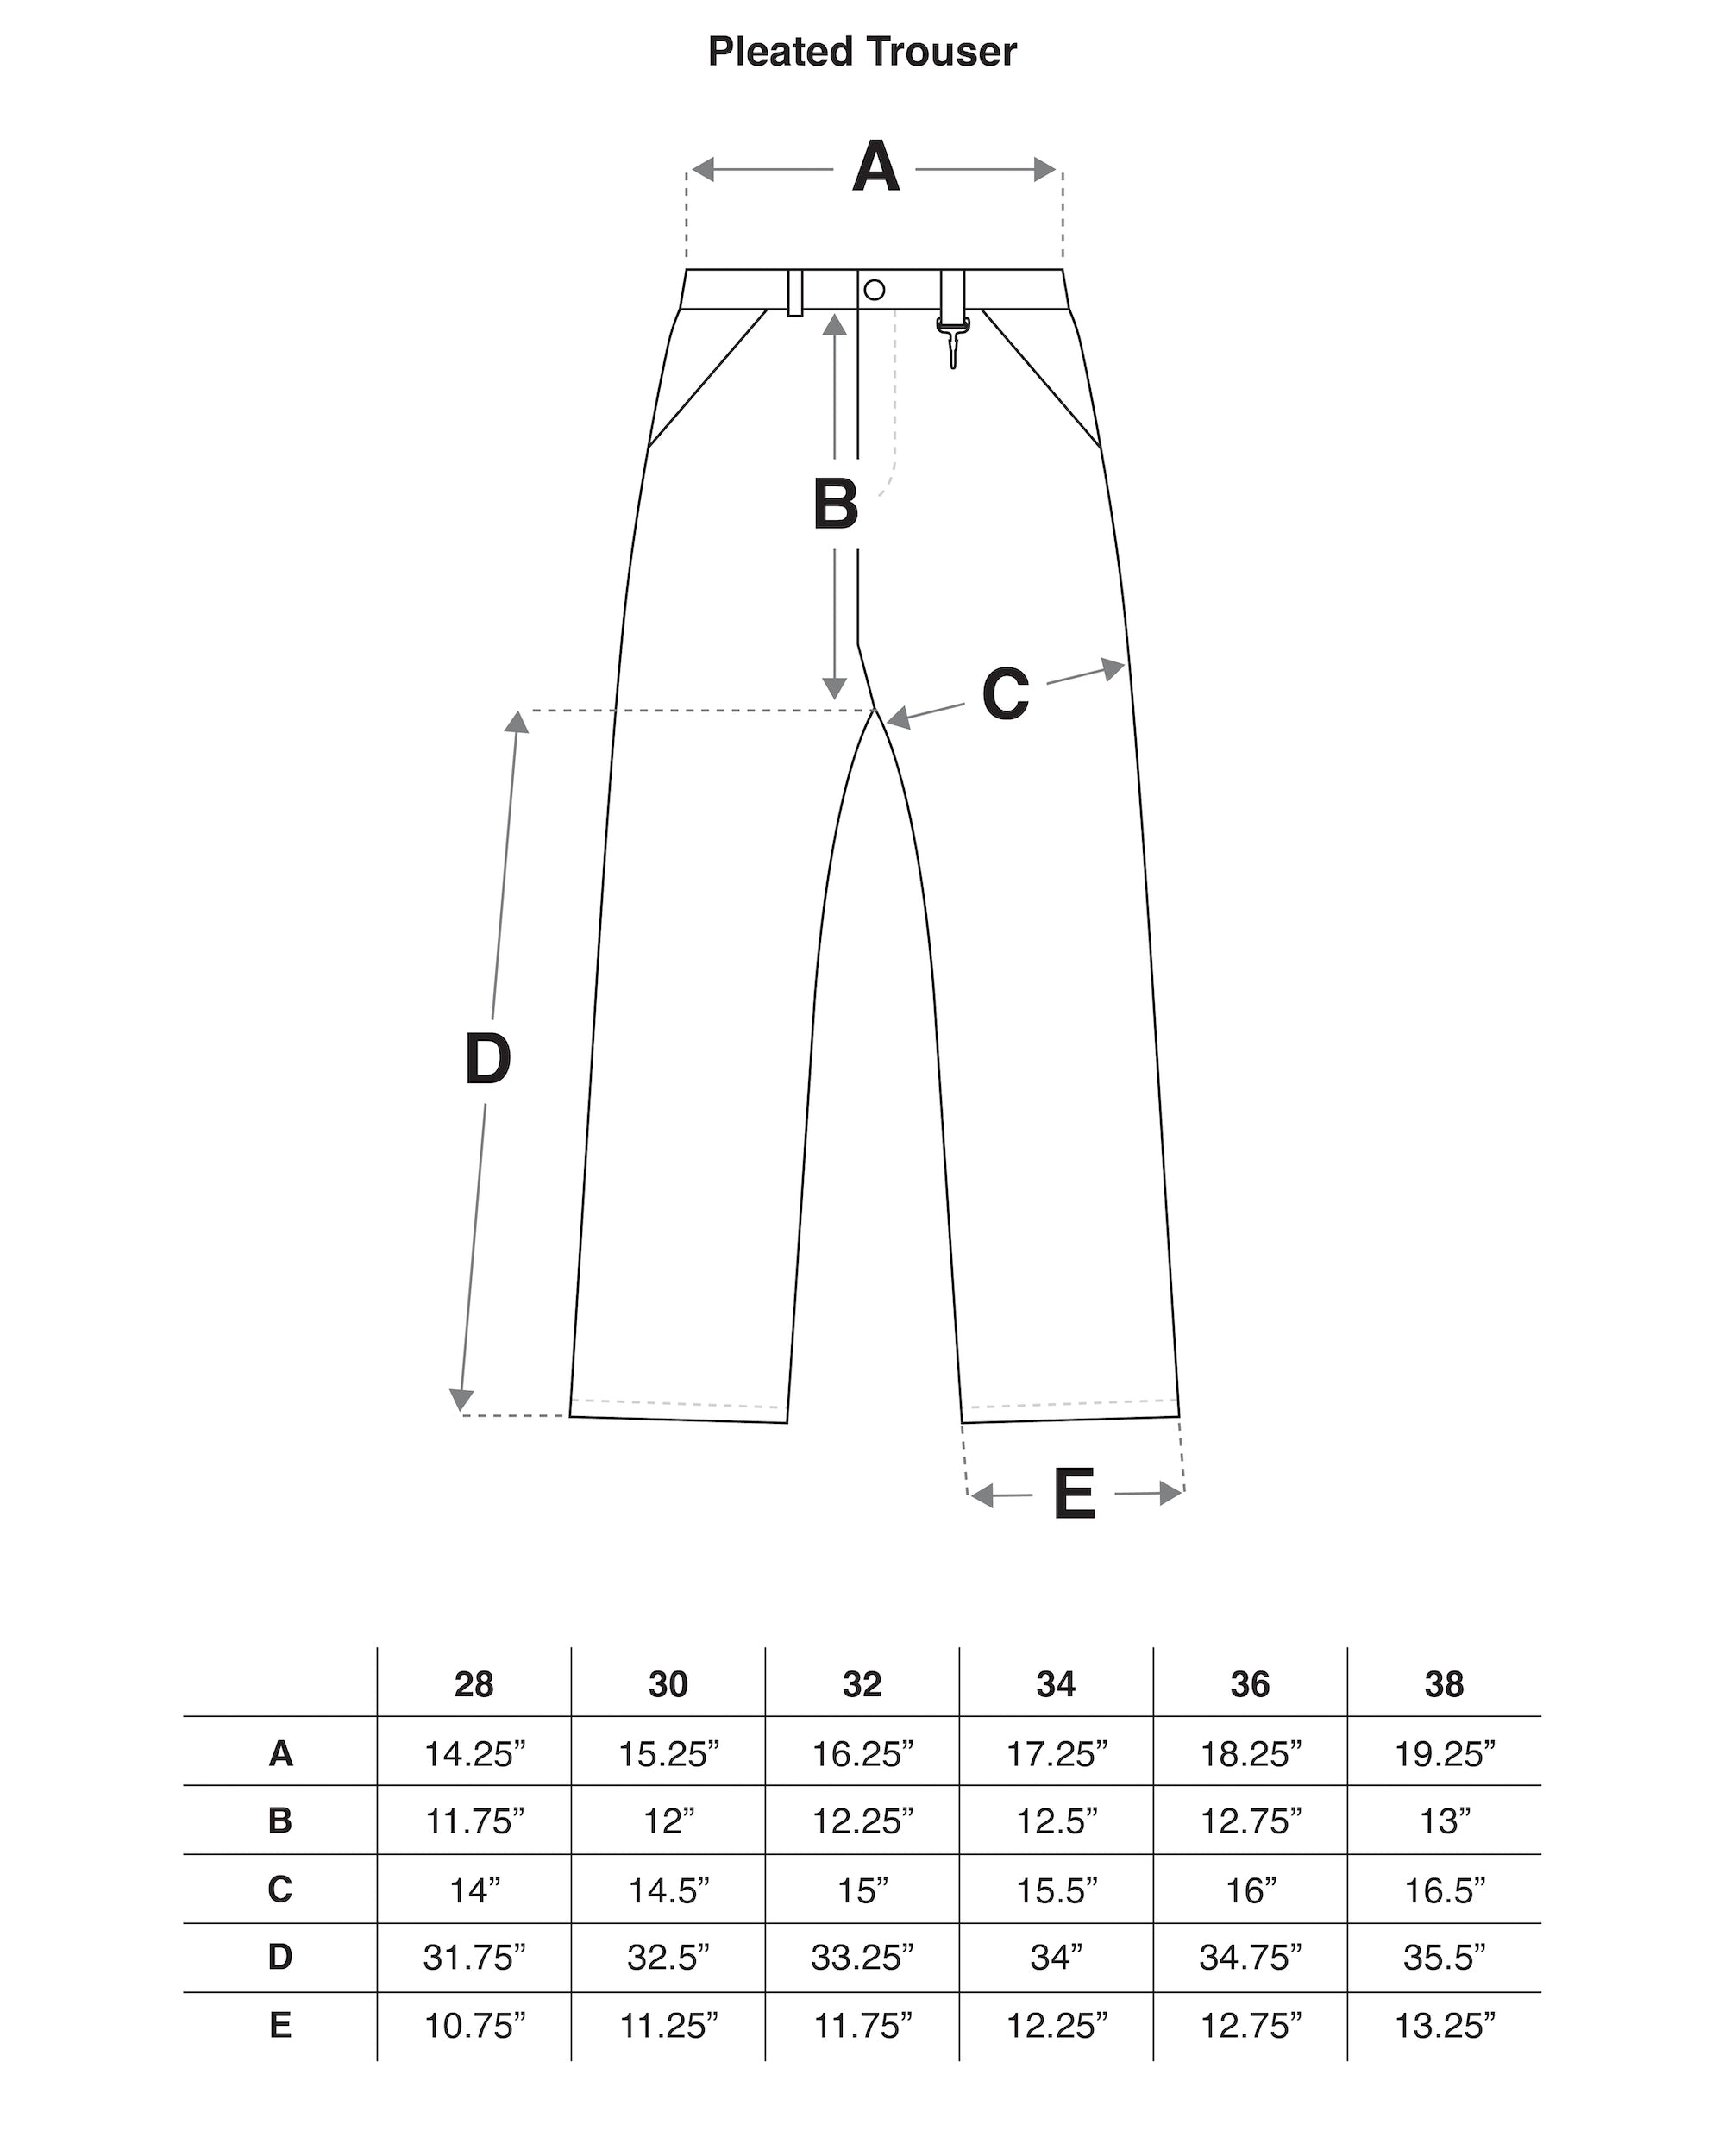 Cotton Twill Pleated Trouser in Blurred Camo Size Guide